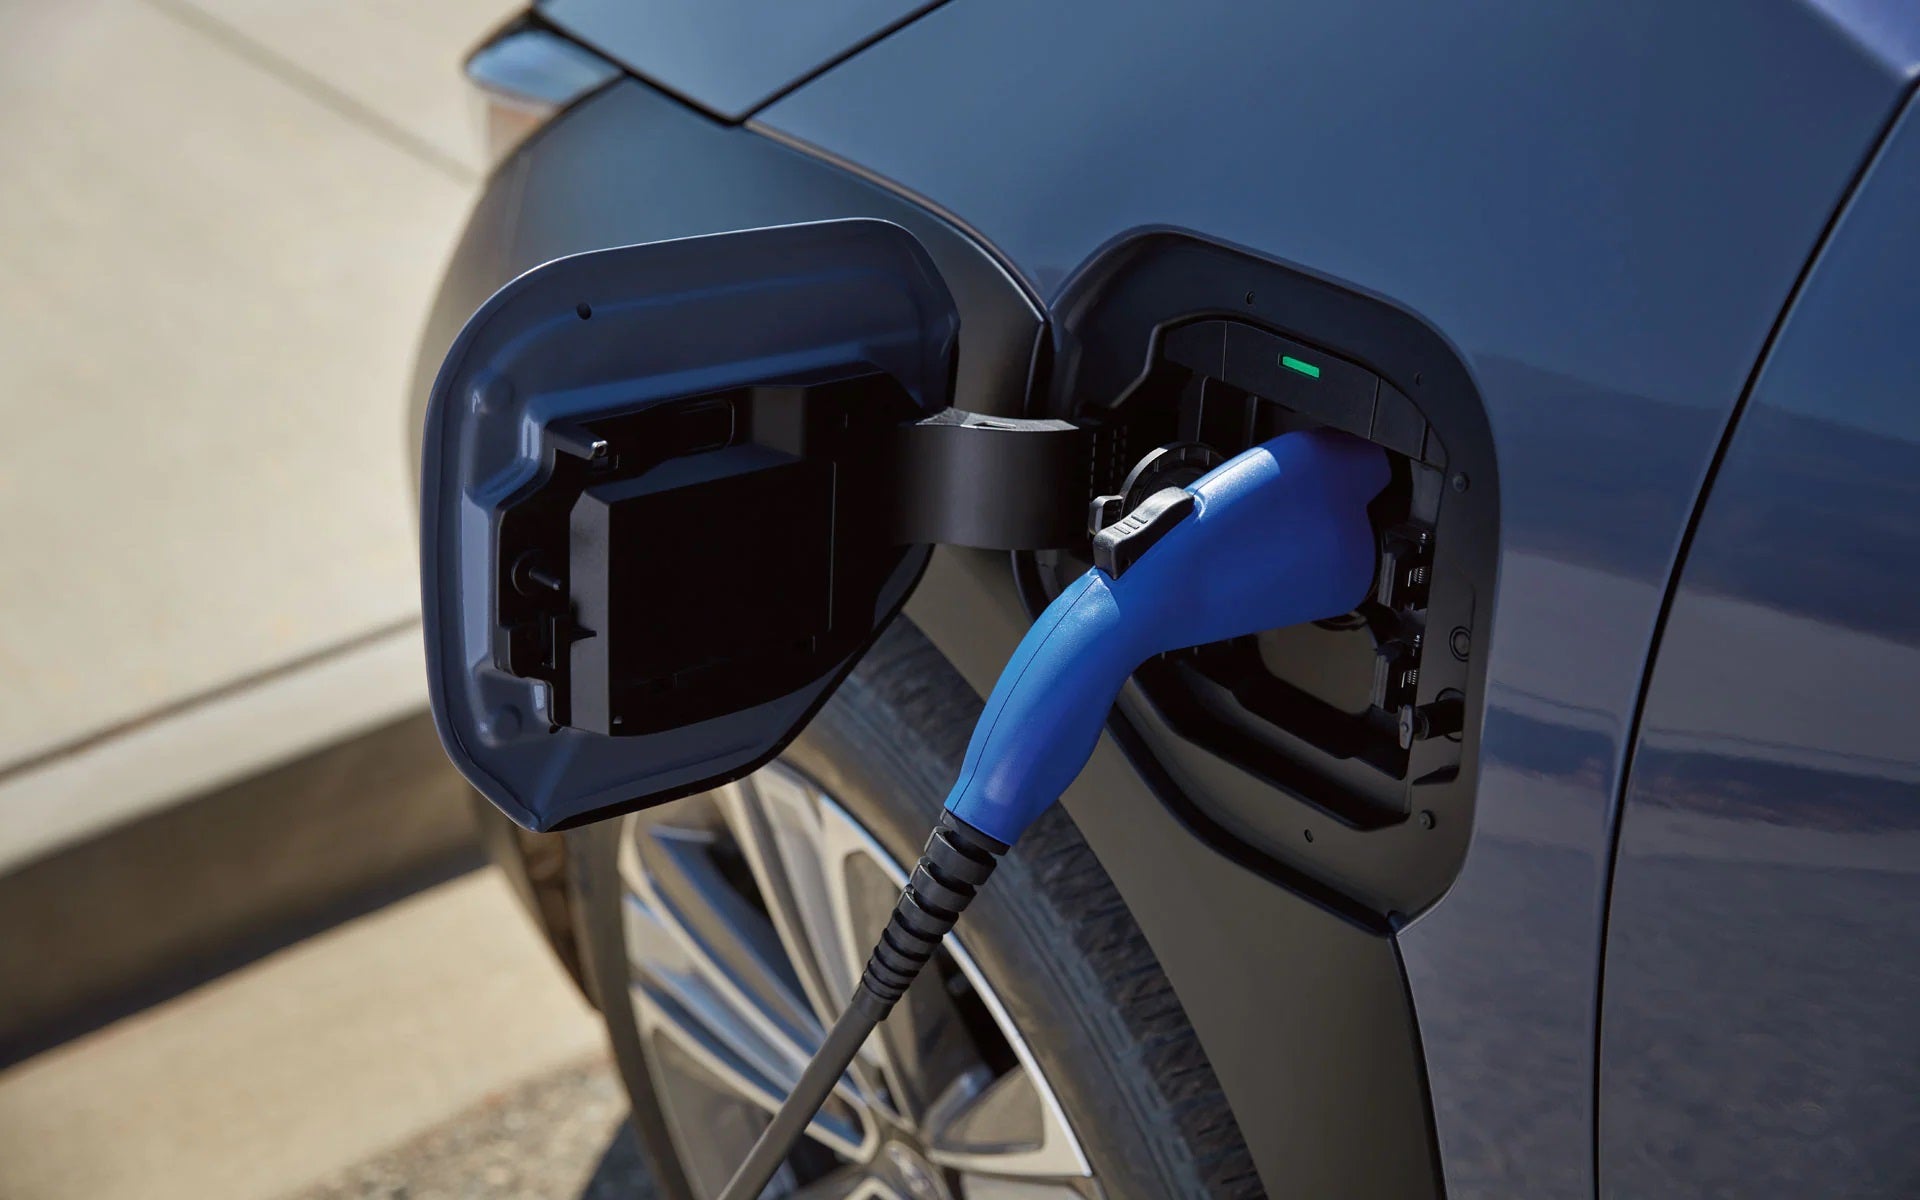 Guide to electric vehicles | Bergstrom Subaru Green Bay in Green Bay WI